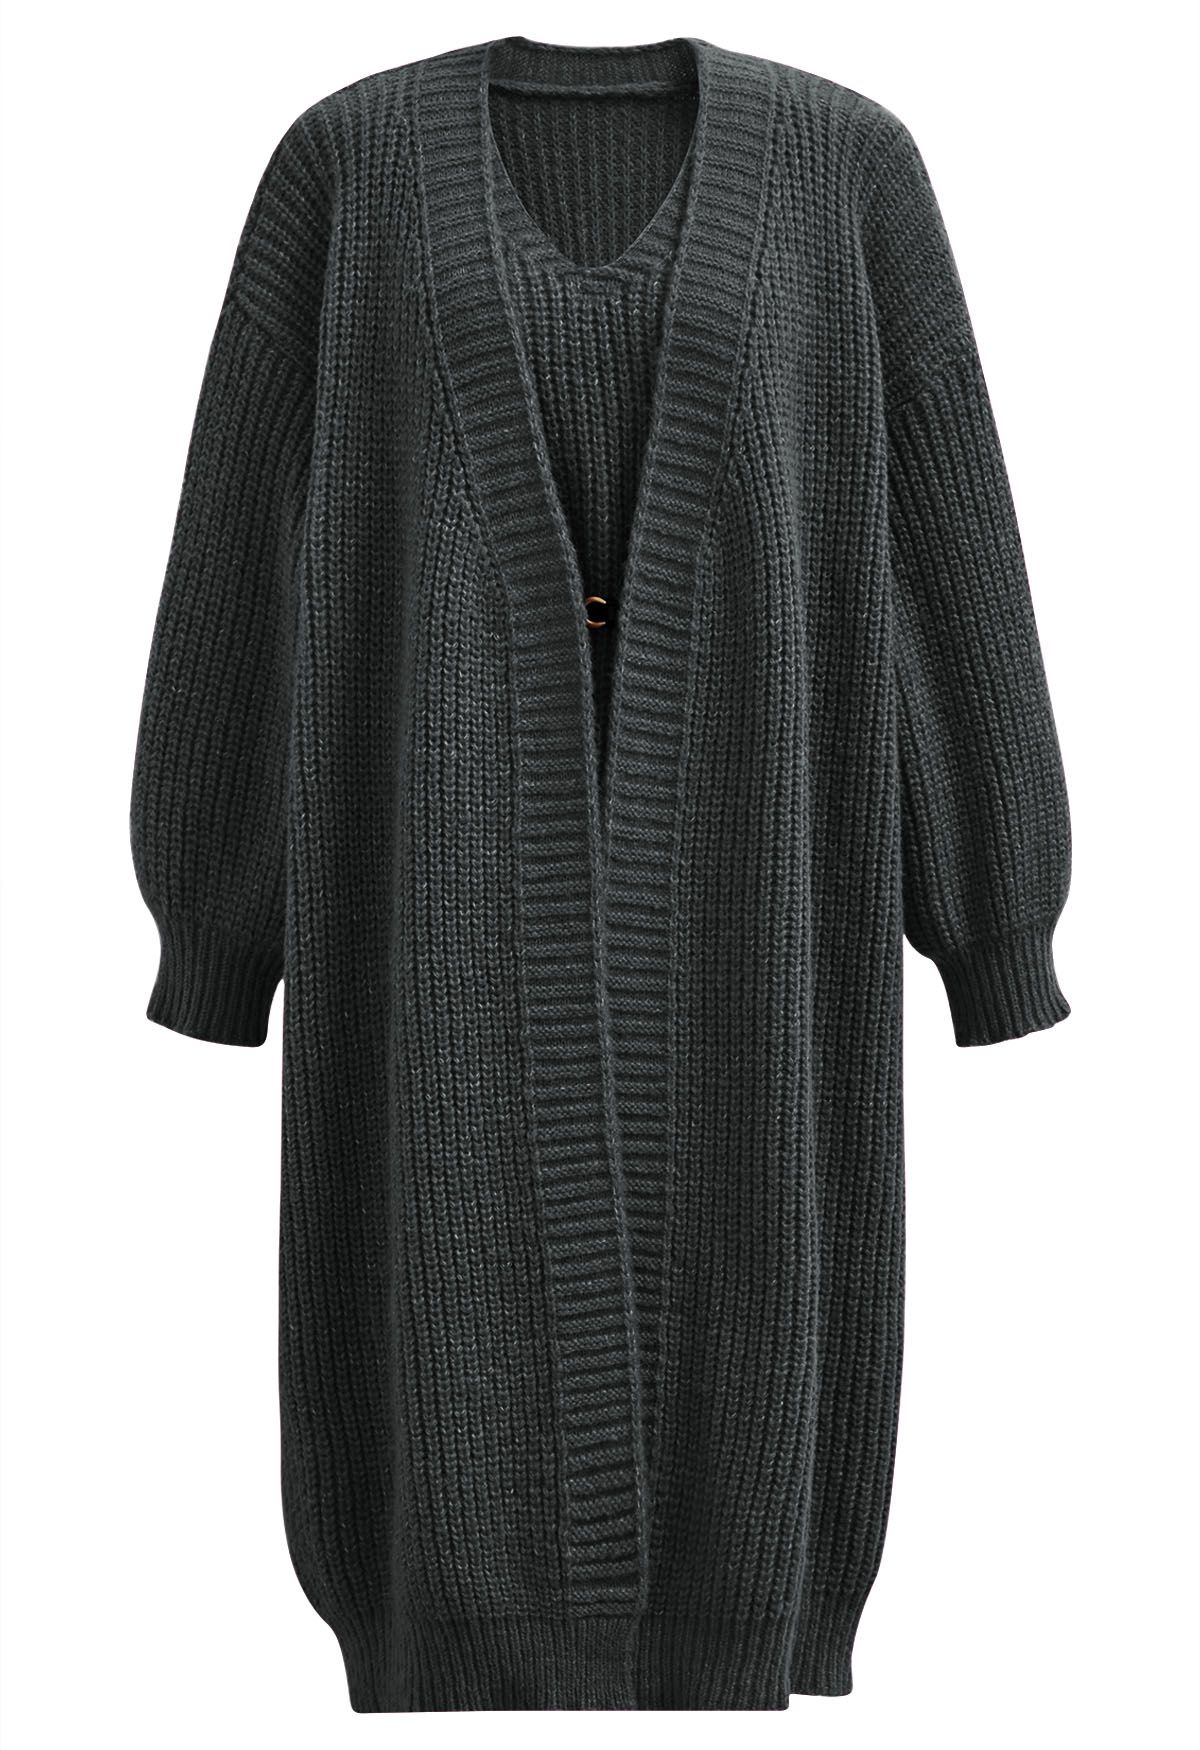 Effortless V-Neck Sleeveless Knit Dress and Longline Cardigan Set in Smoke